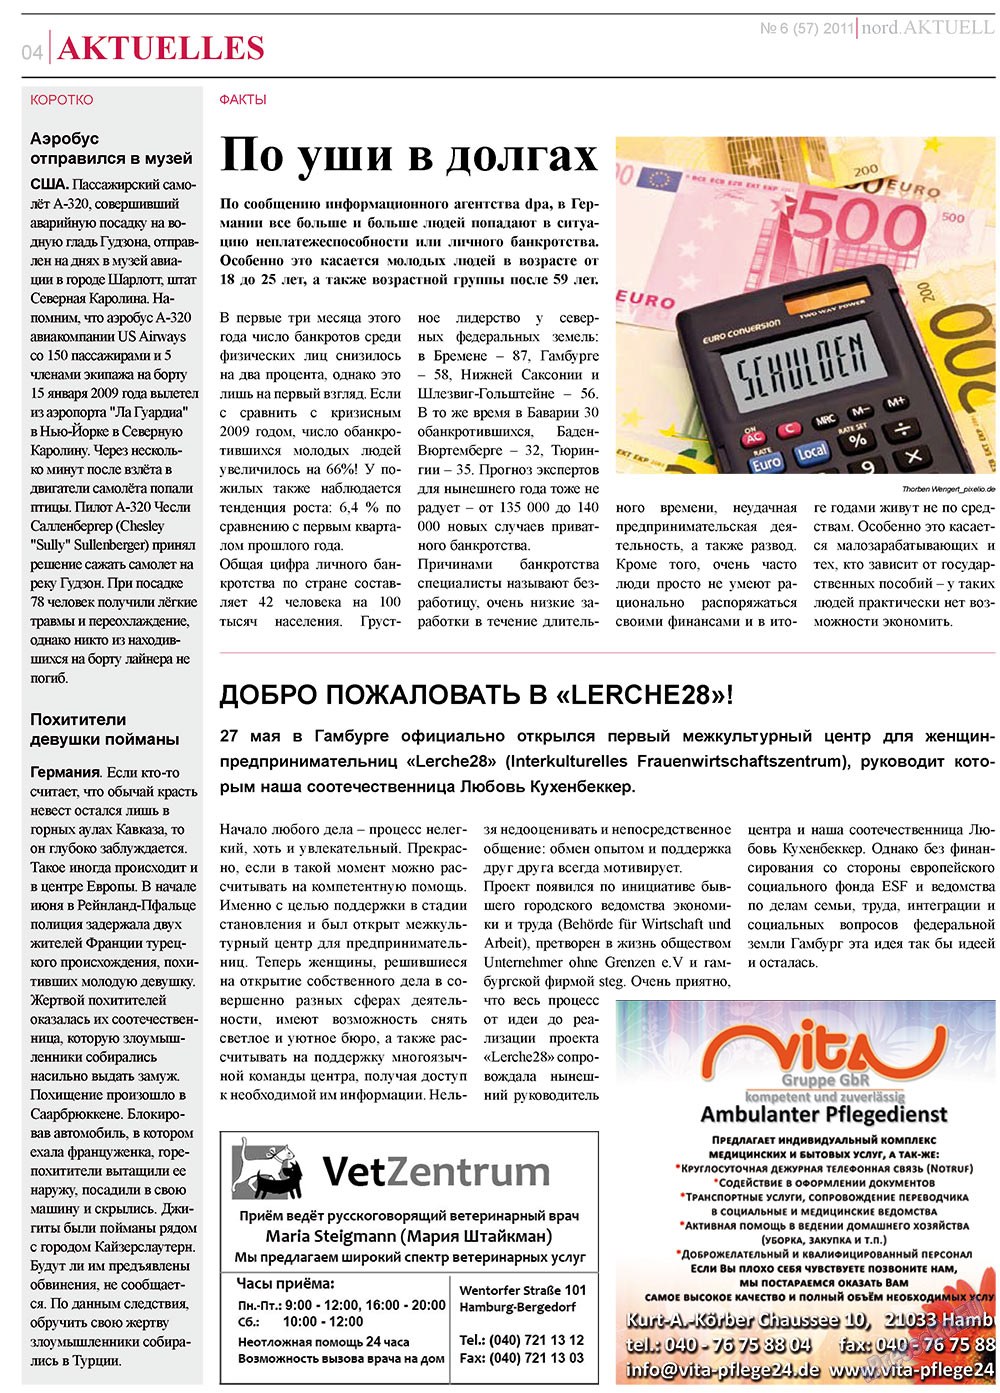 nord.Aktuell, газета. 2011 №6 стр.4